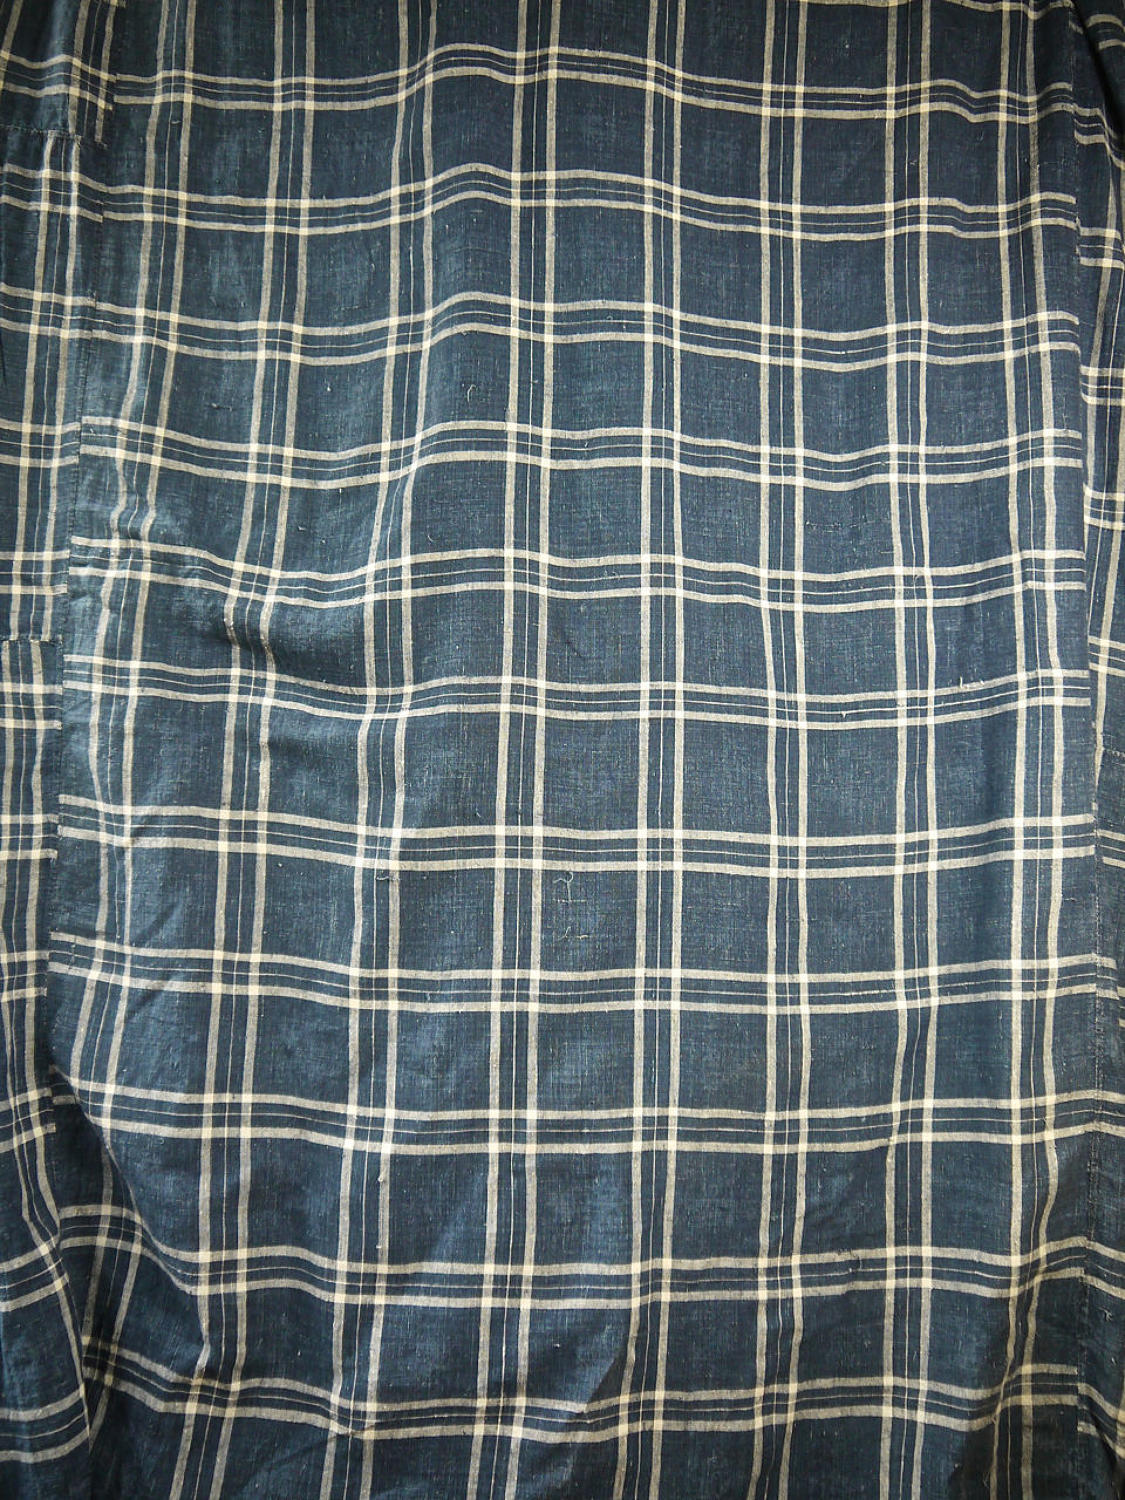 Indigo Checked Linen Mattress Cover French 18th Century